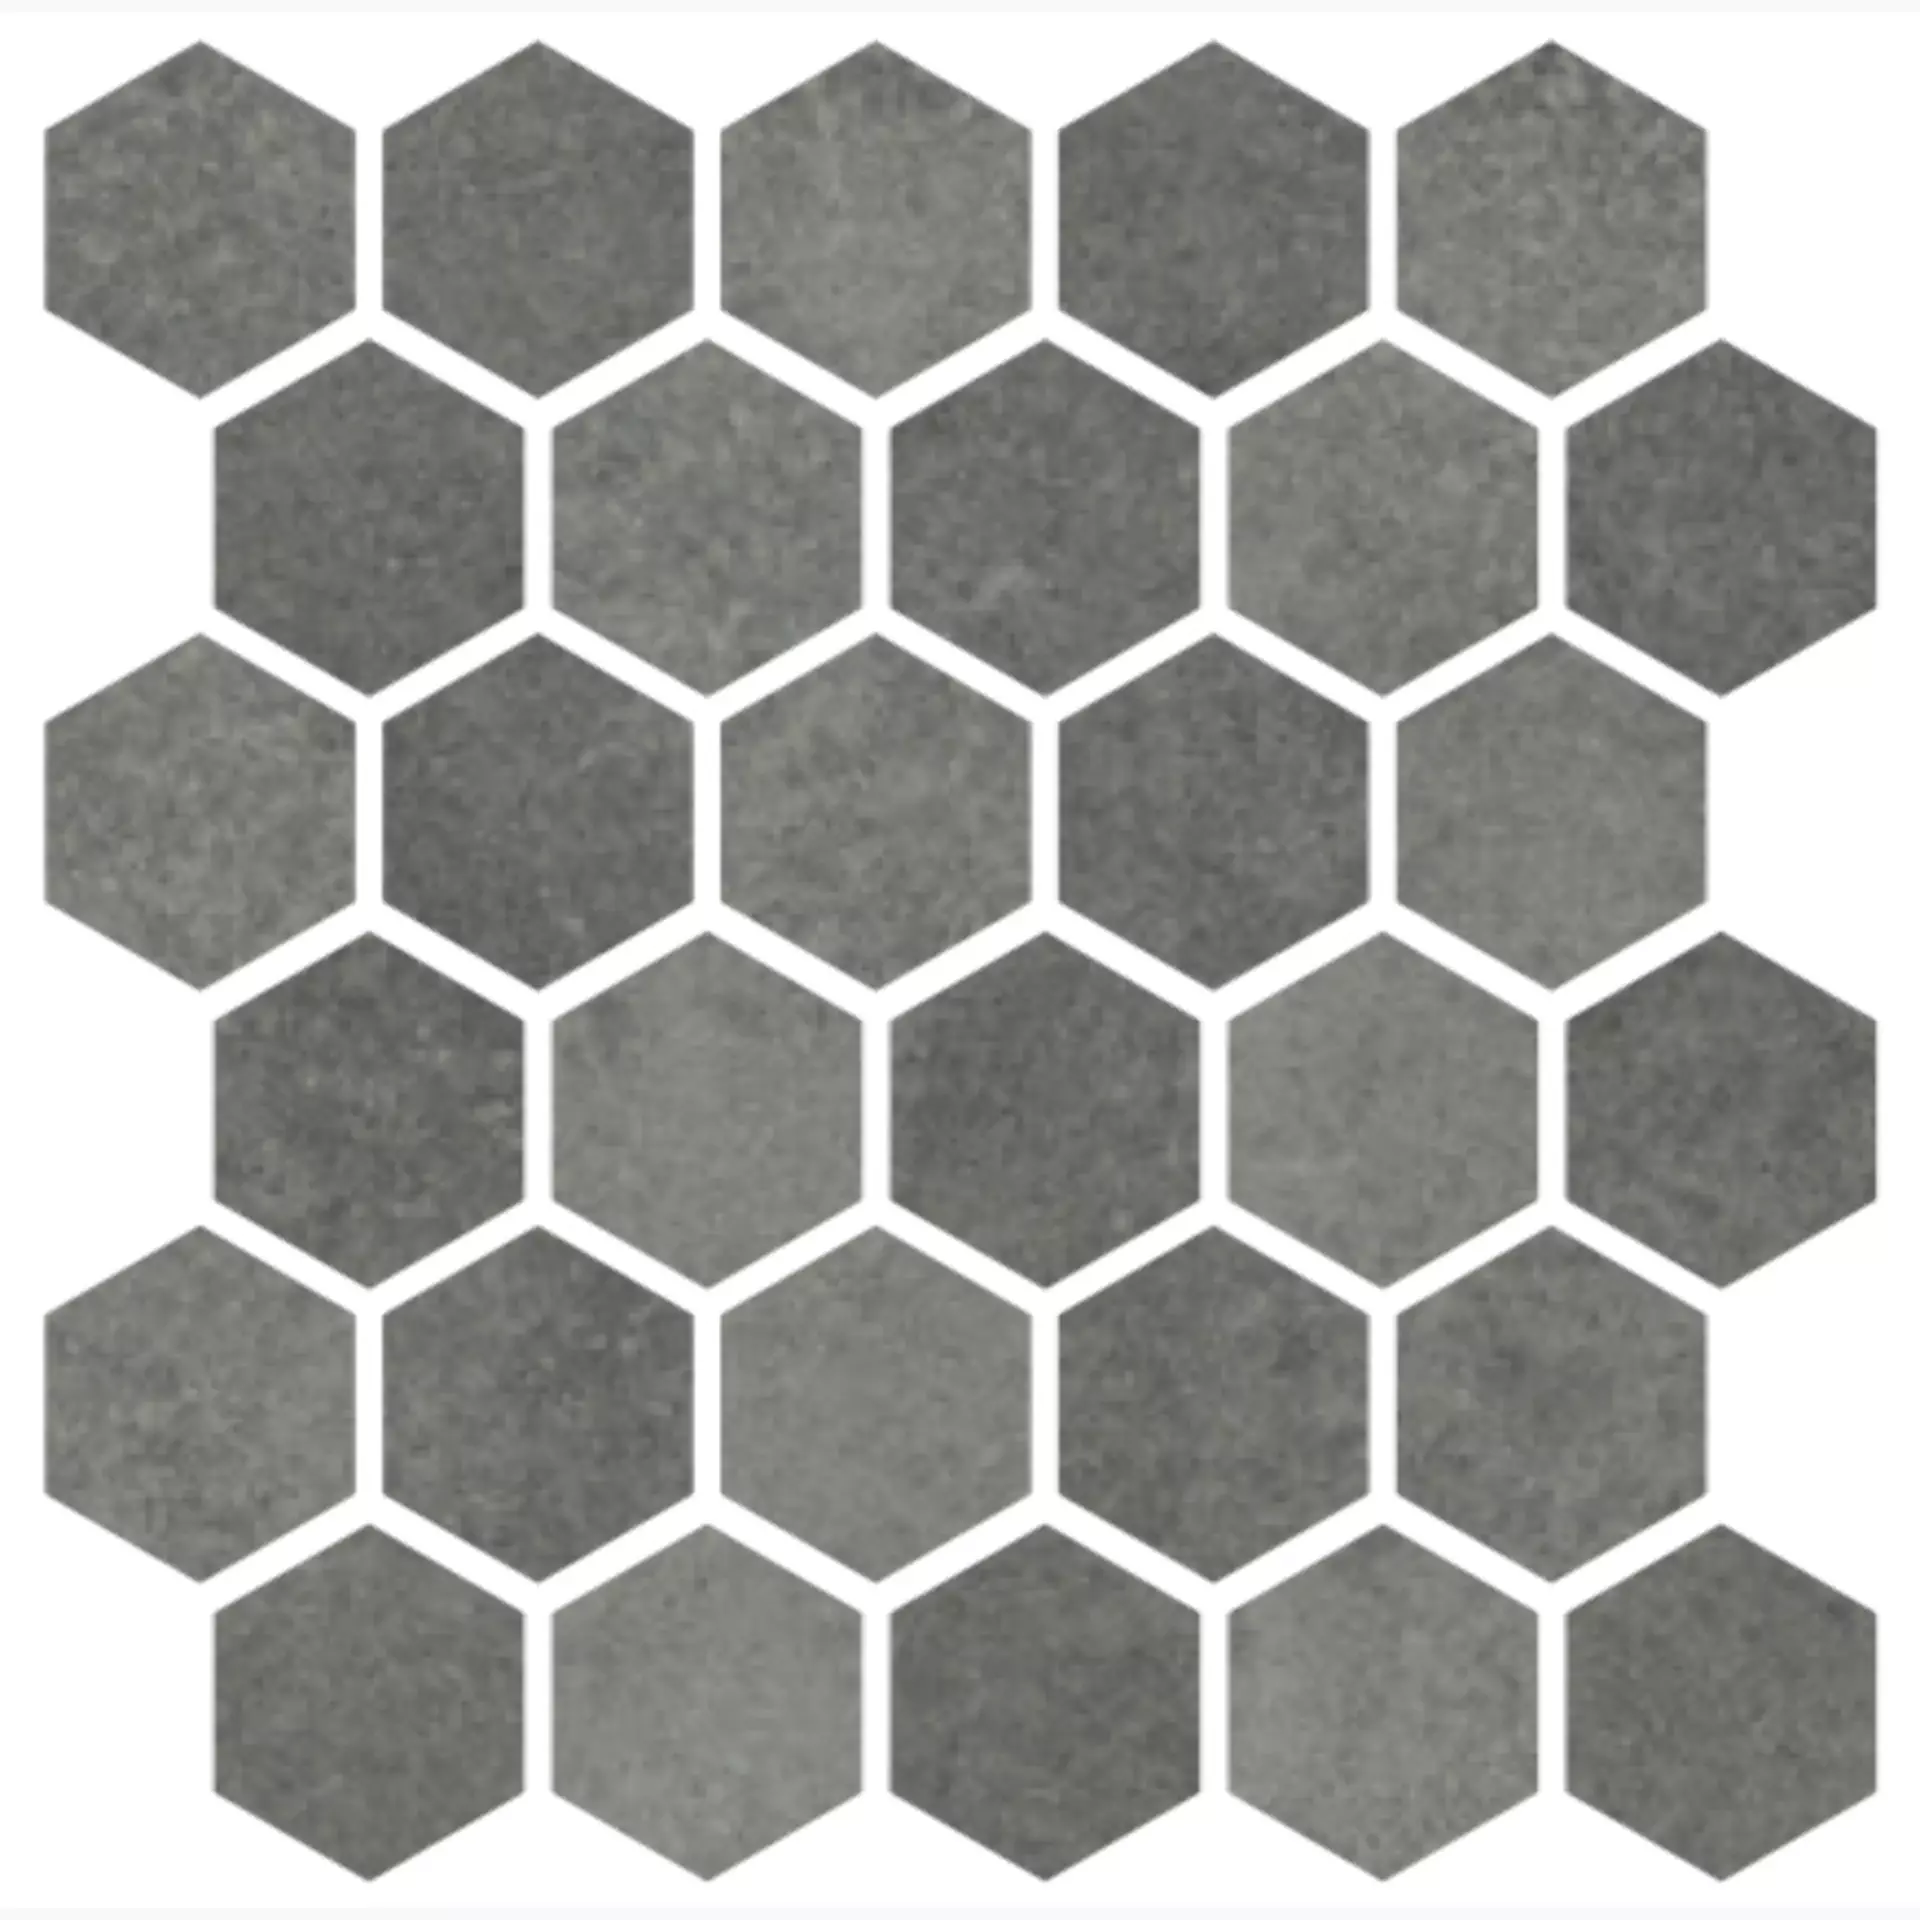 CIR Materia Prima Hunter Green Naturale Mosaic Hexagon 1069912 27x27cm 10mm